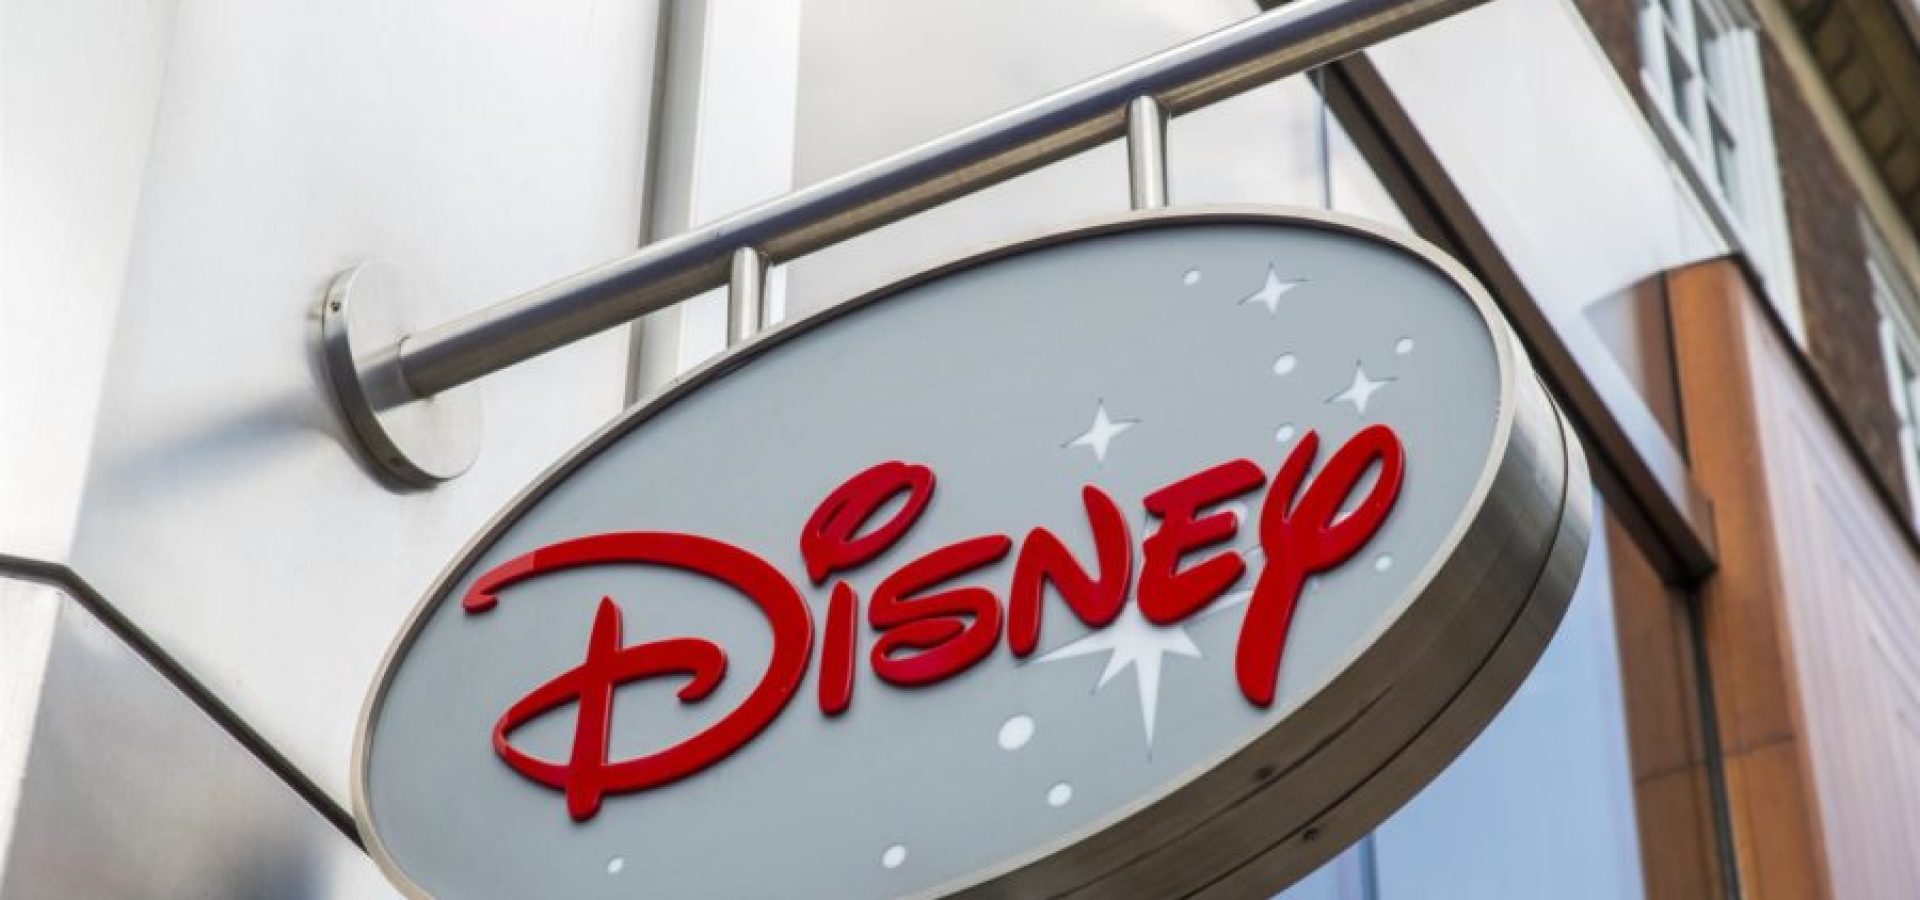 Disney and Mulan Premier Access